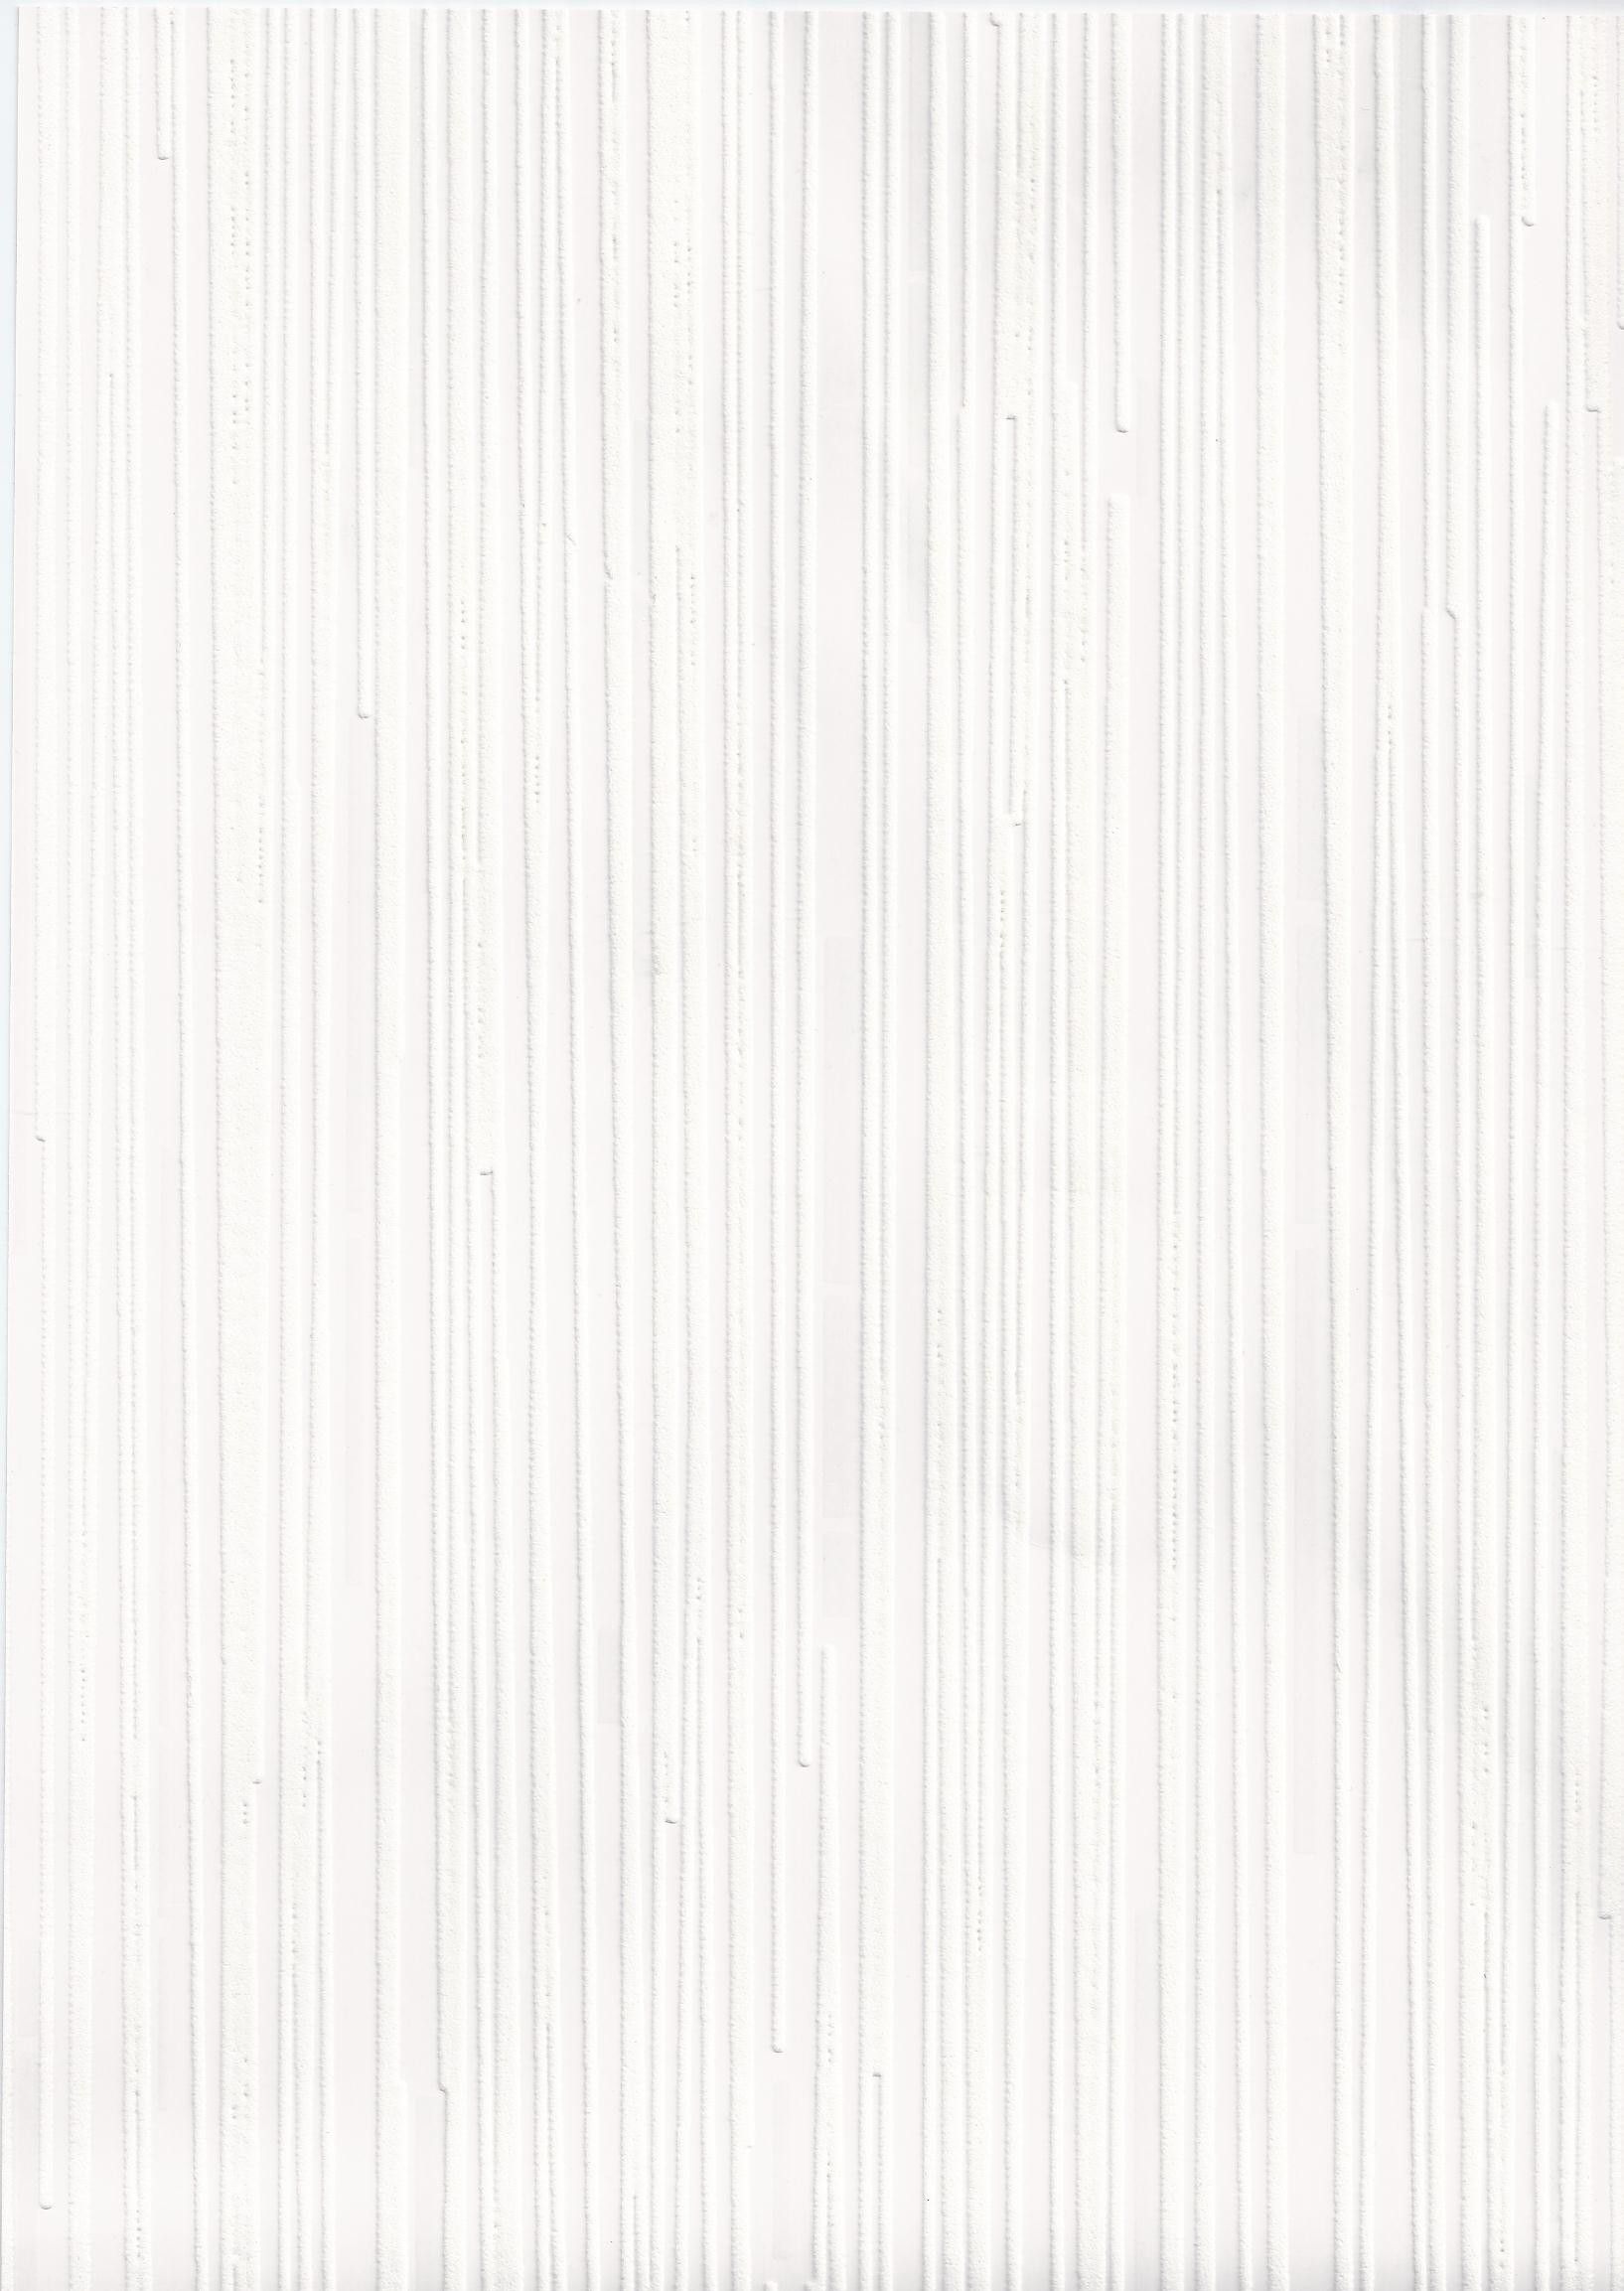 Plain White Wallpapers HD (más de 66 imágenes)